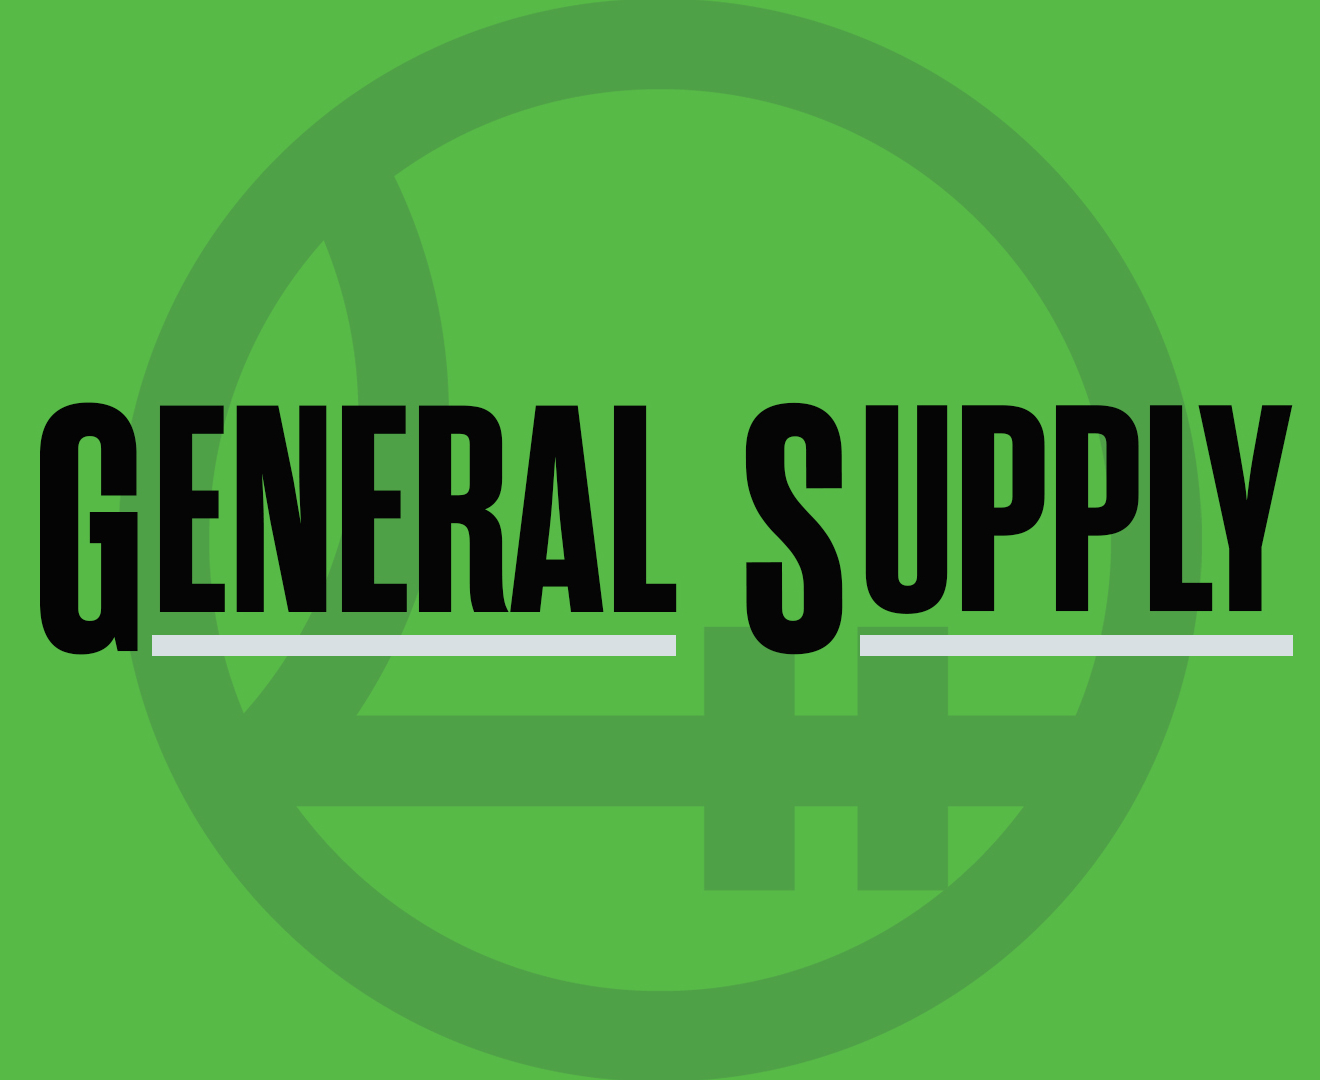 General Supply